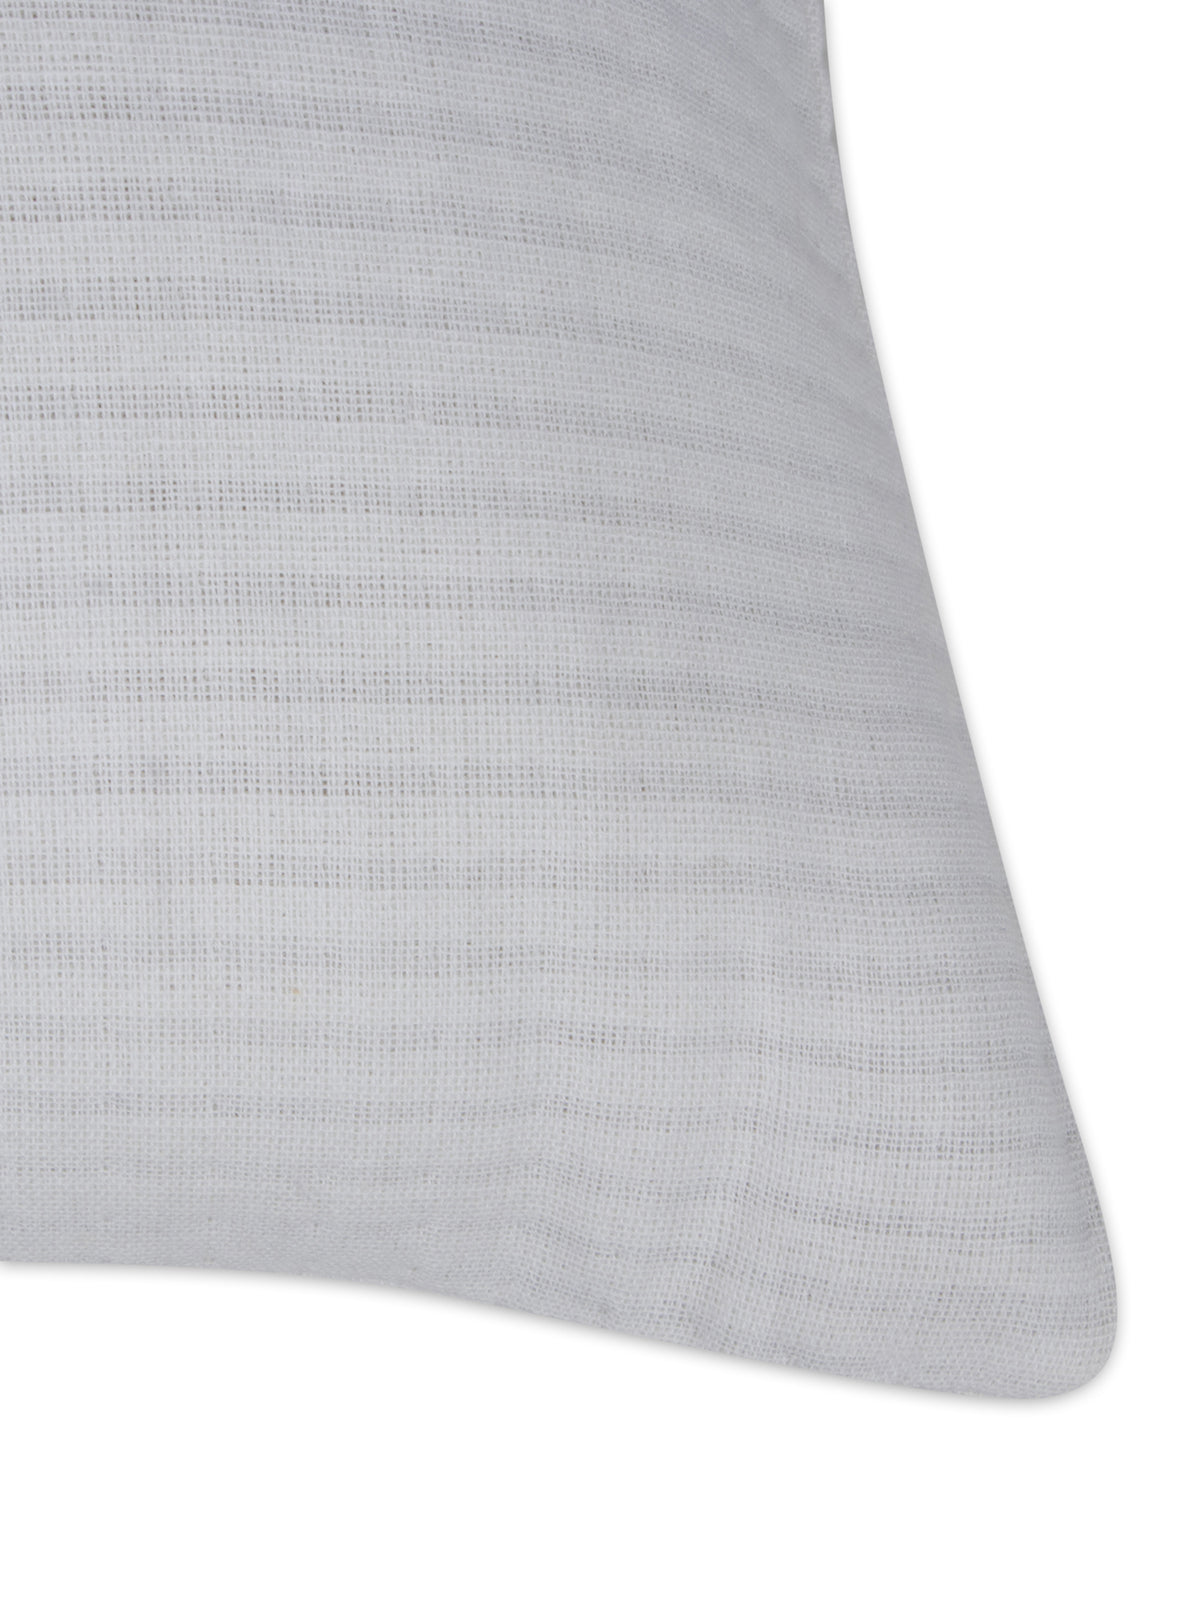 White cotton matelasse cushion cover